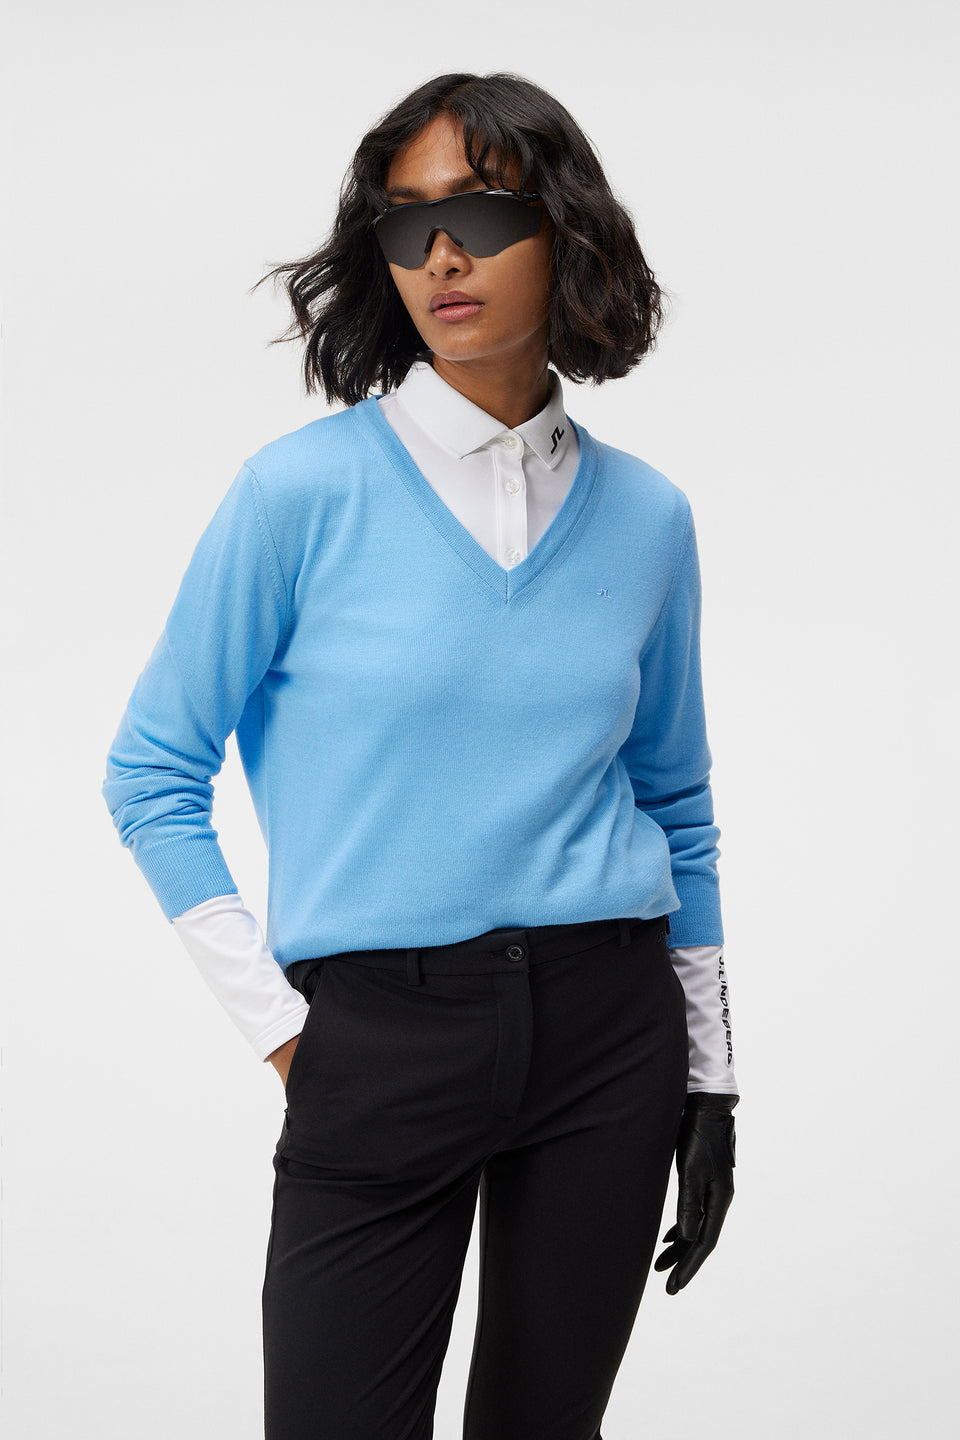 Amaya Knitted Sweater / Little Boy Blue